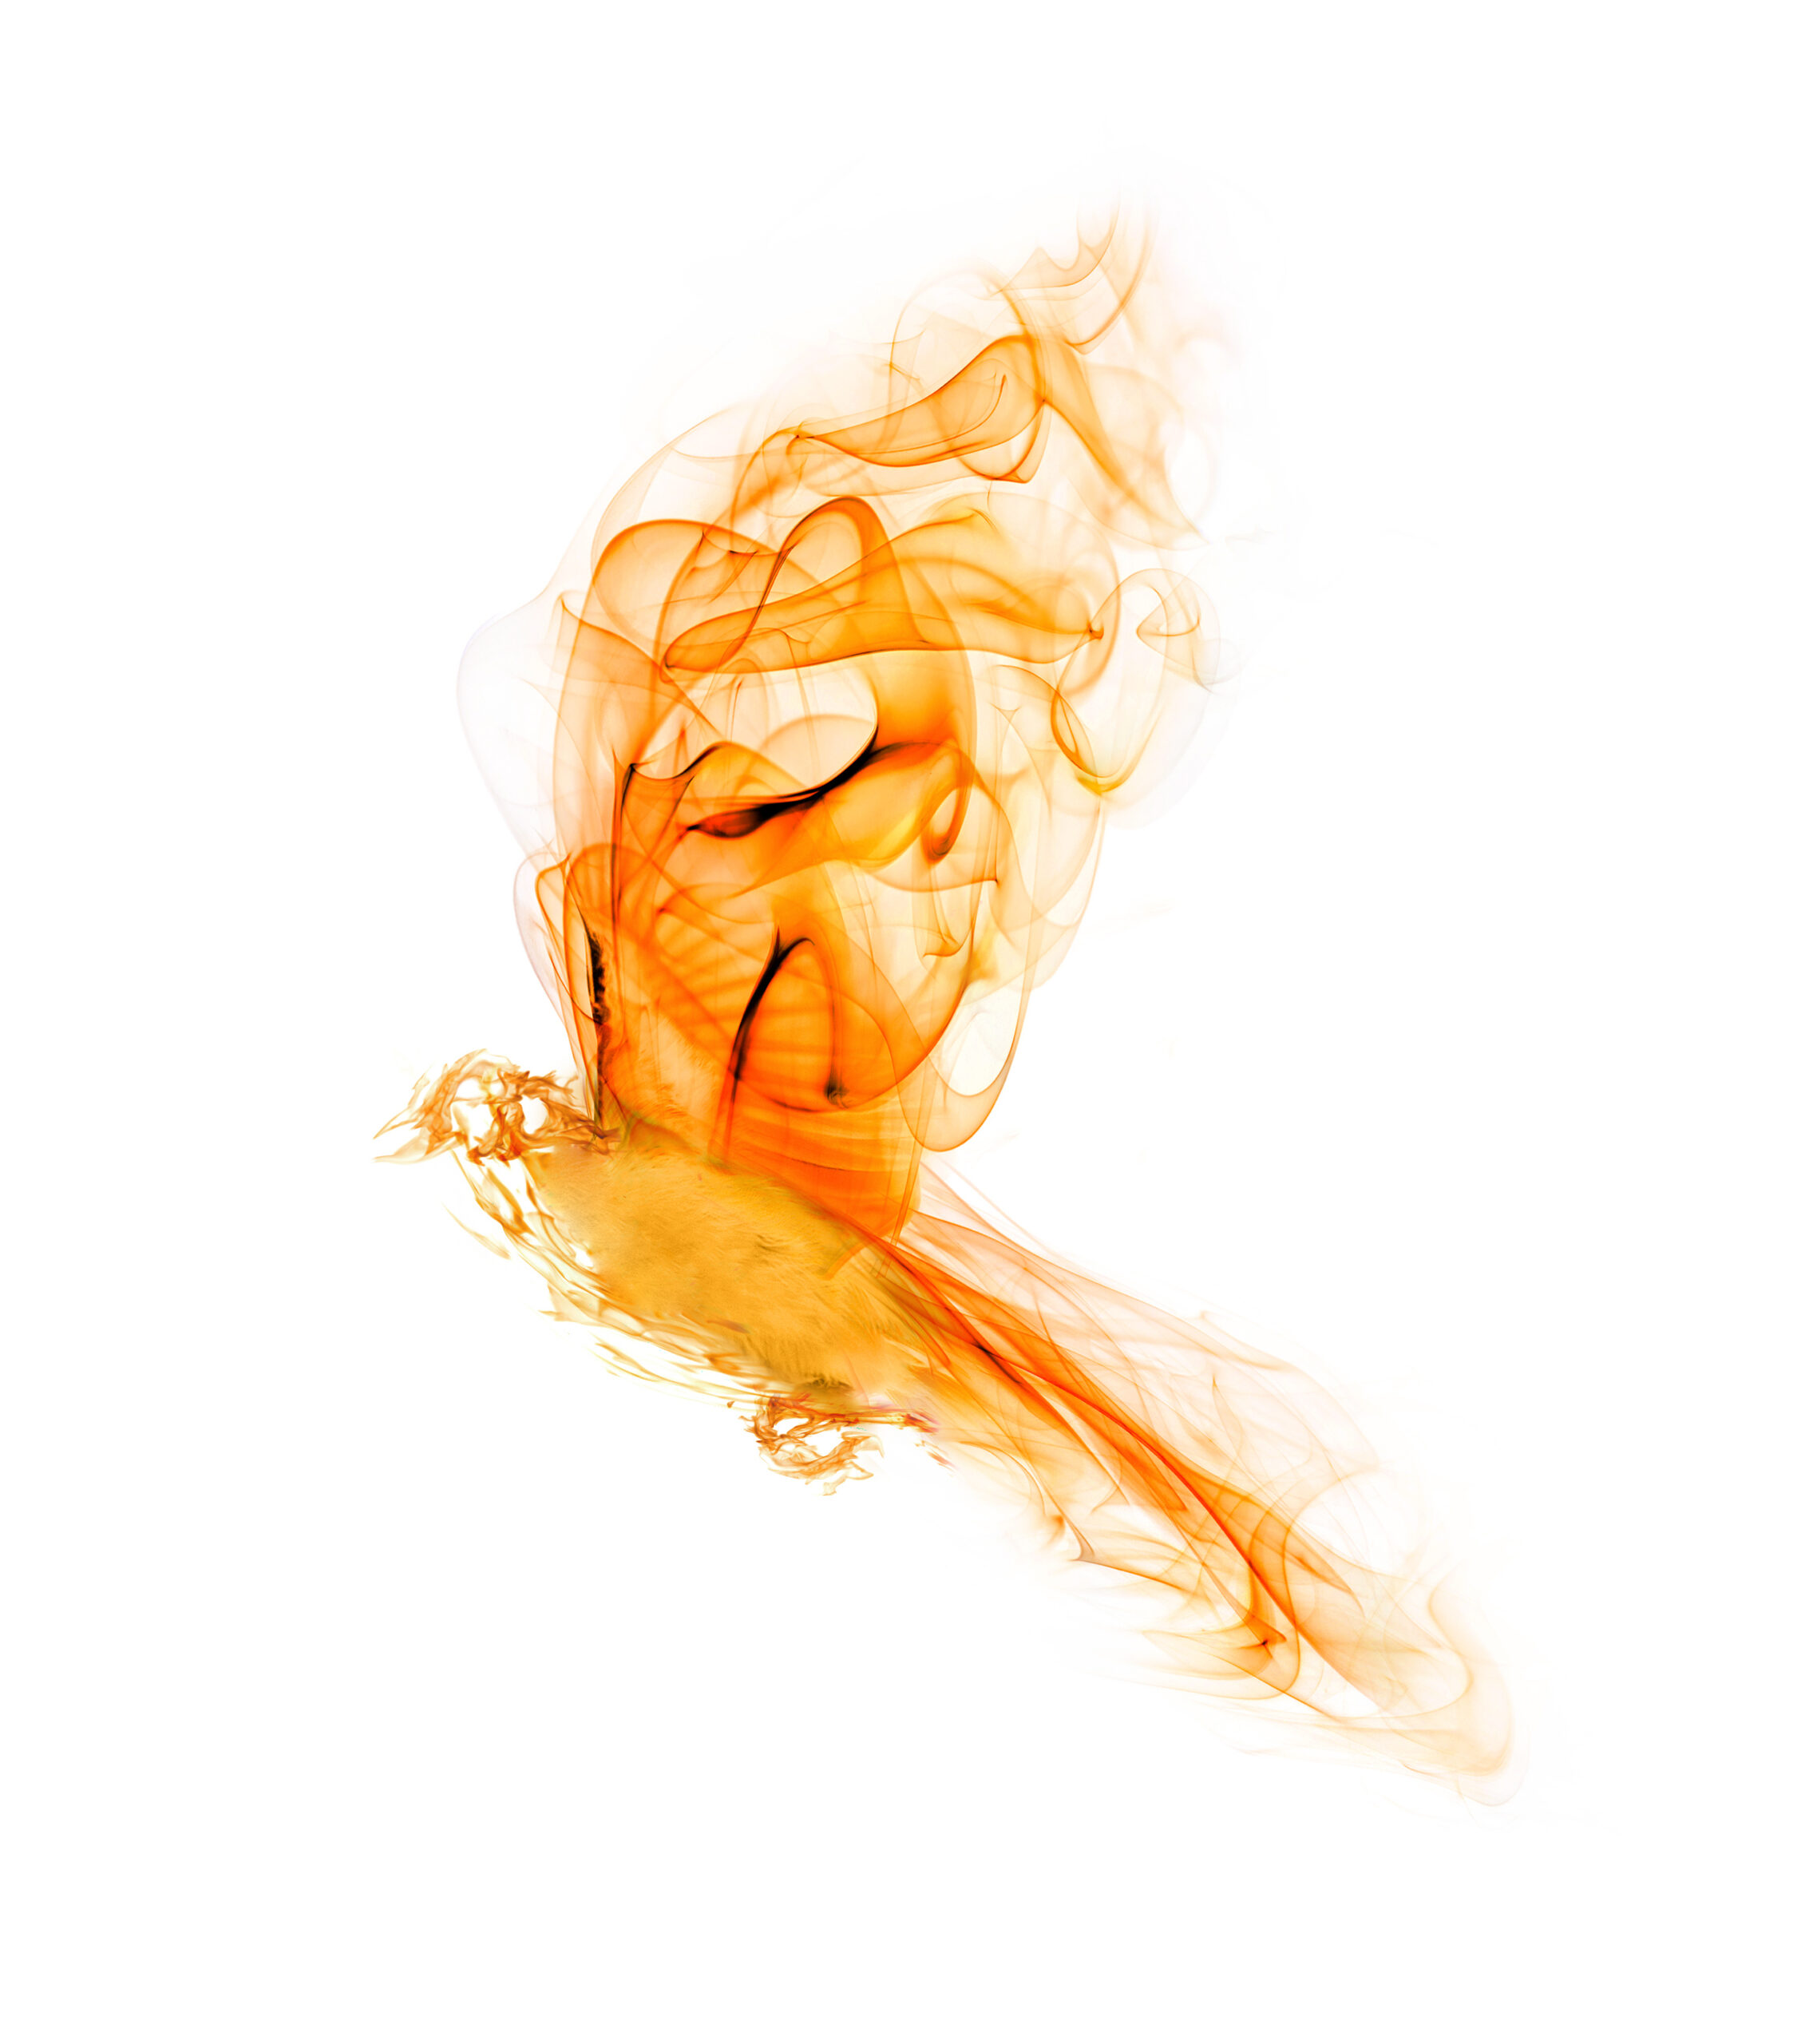 orange flame flying small bird on white